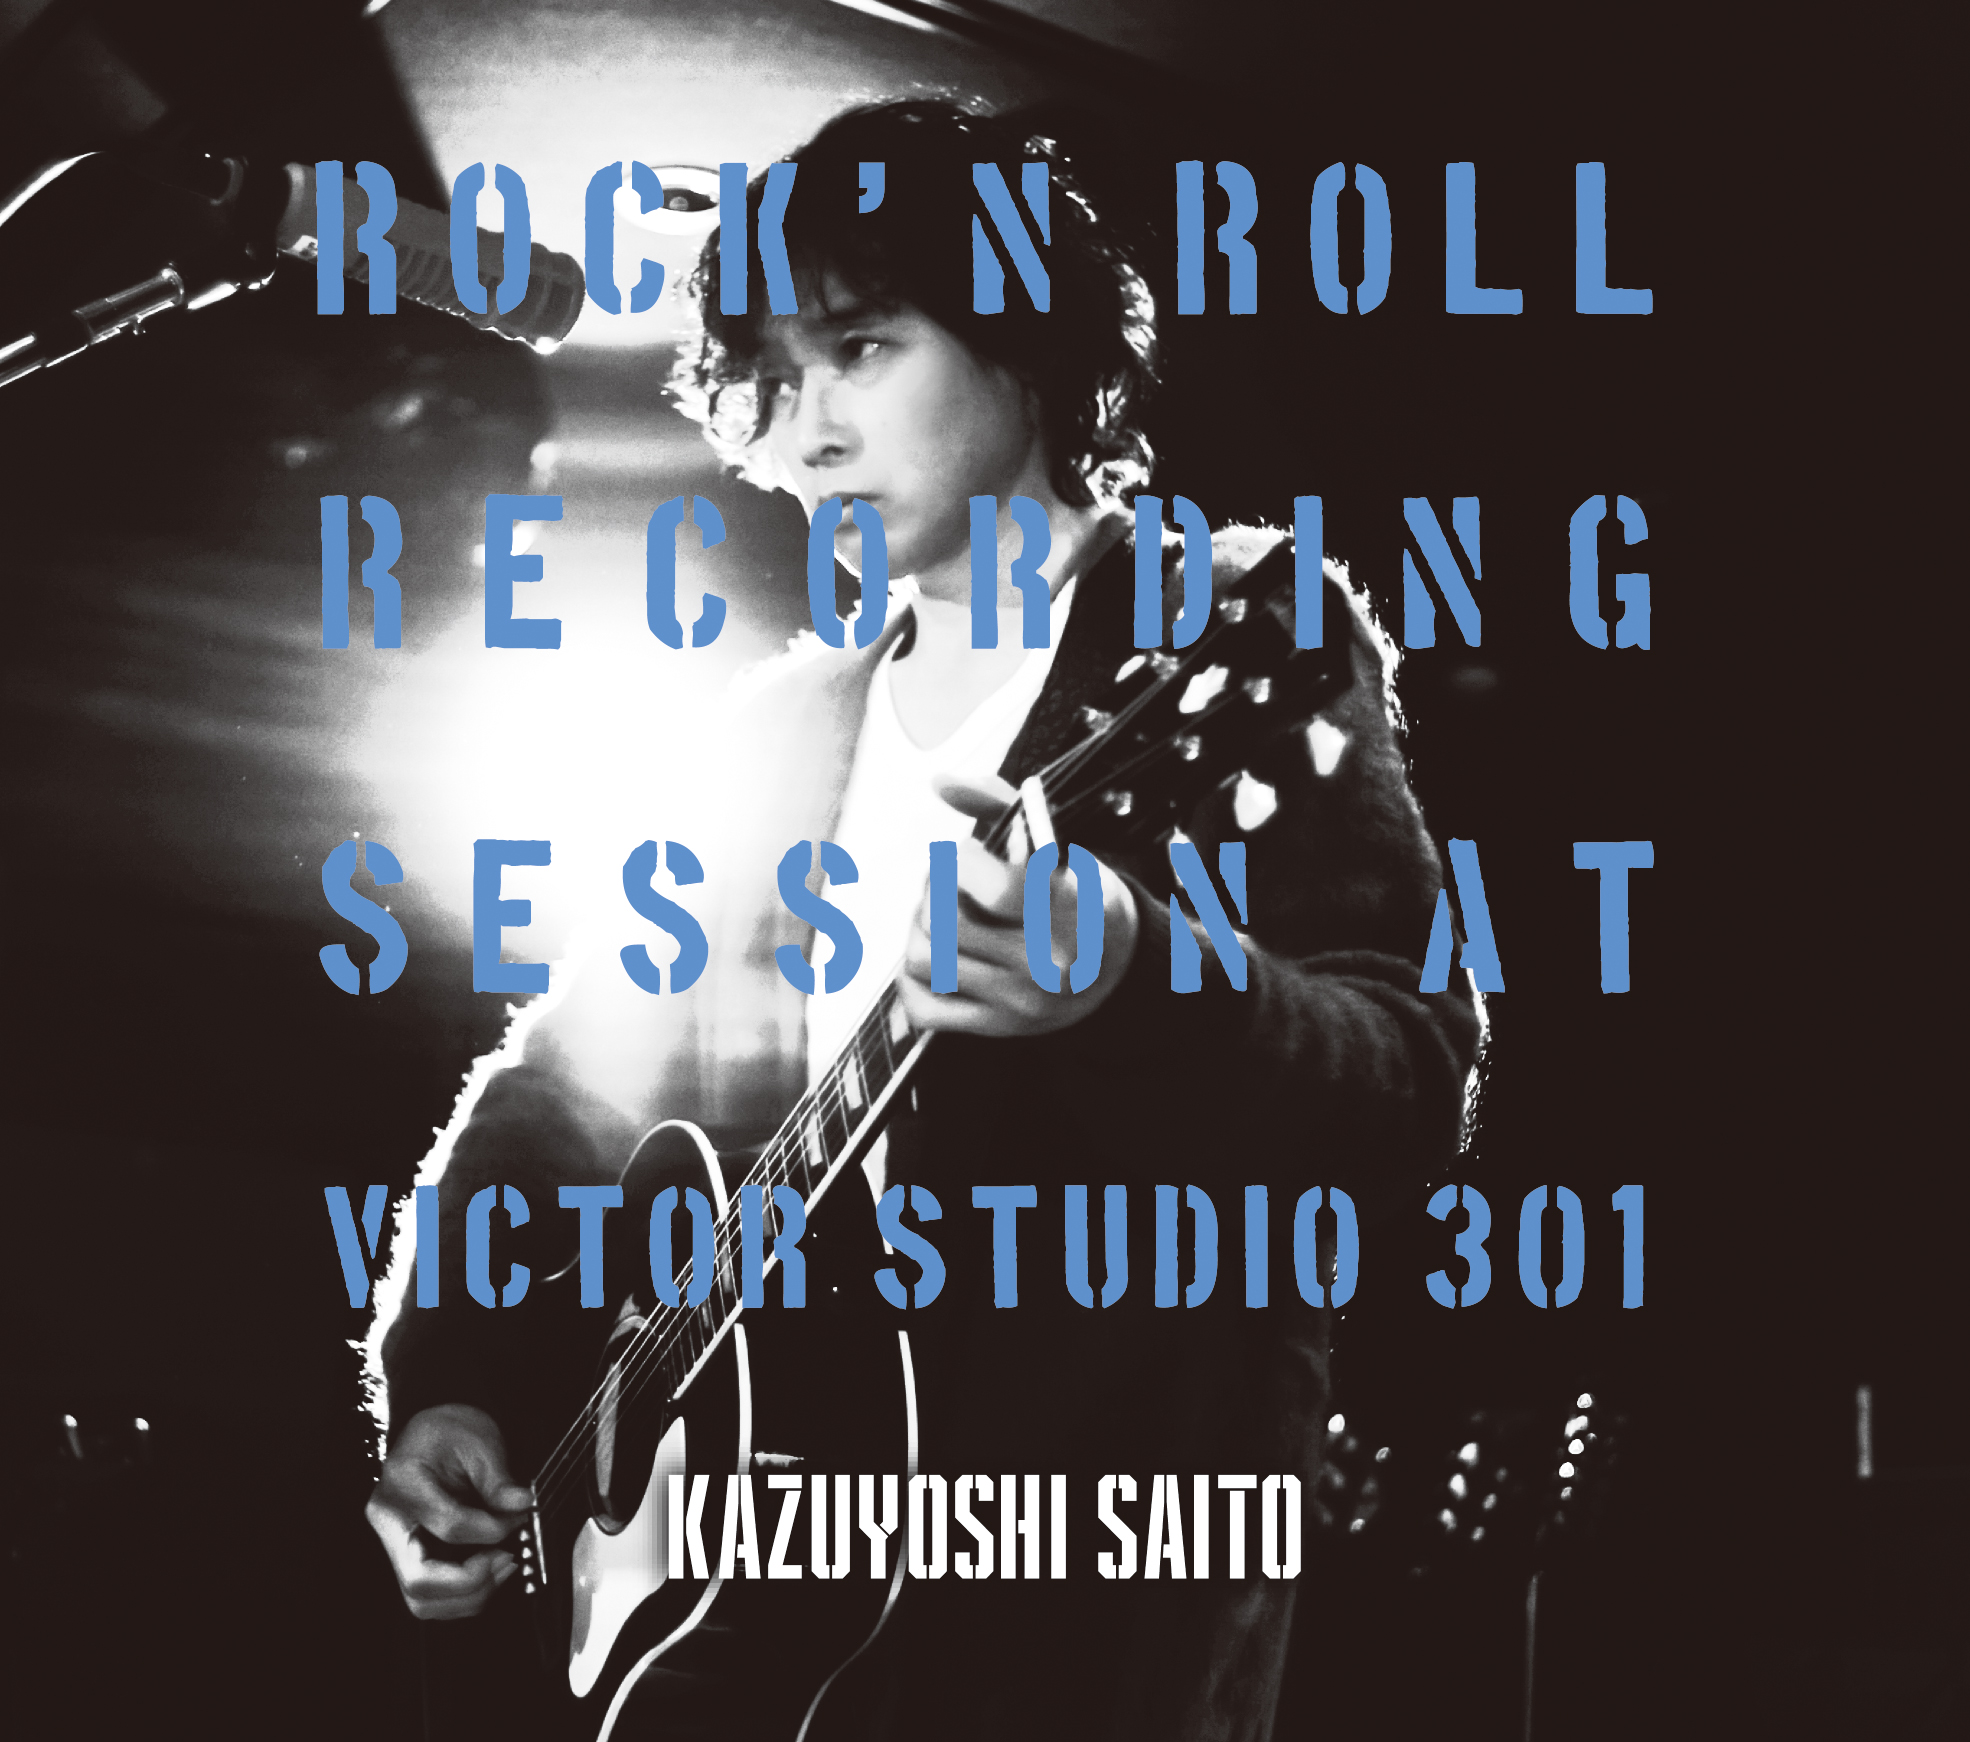 30th. Anniversary Album 『ROCK’N ROLL Recording Session at Victor Studio 301』